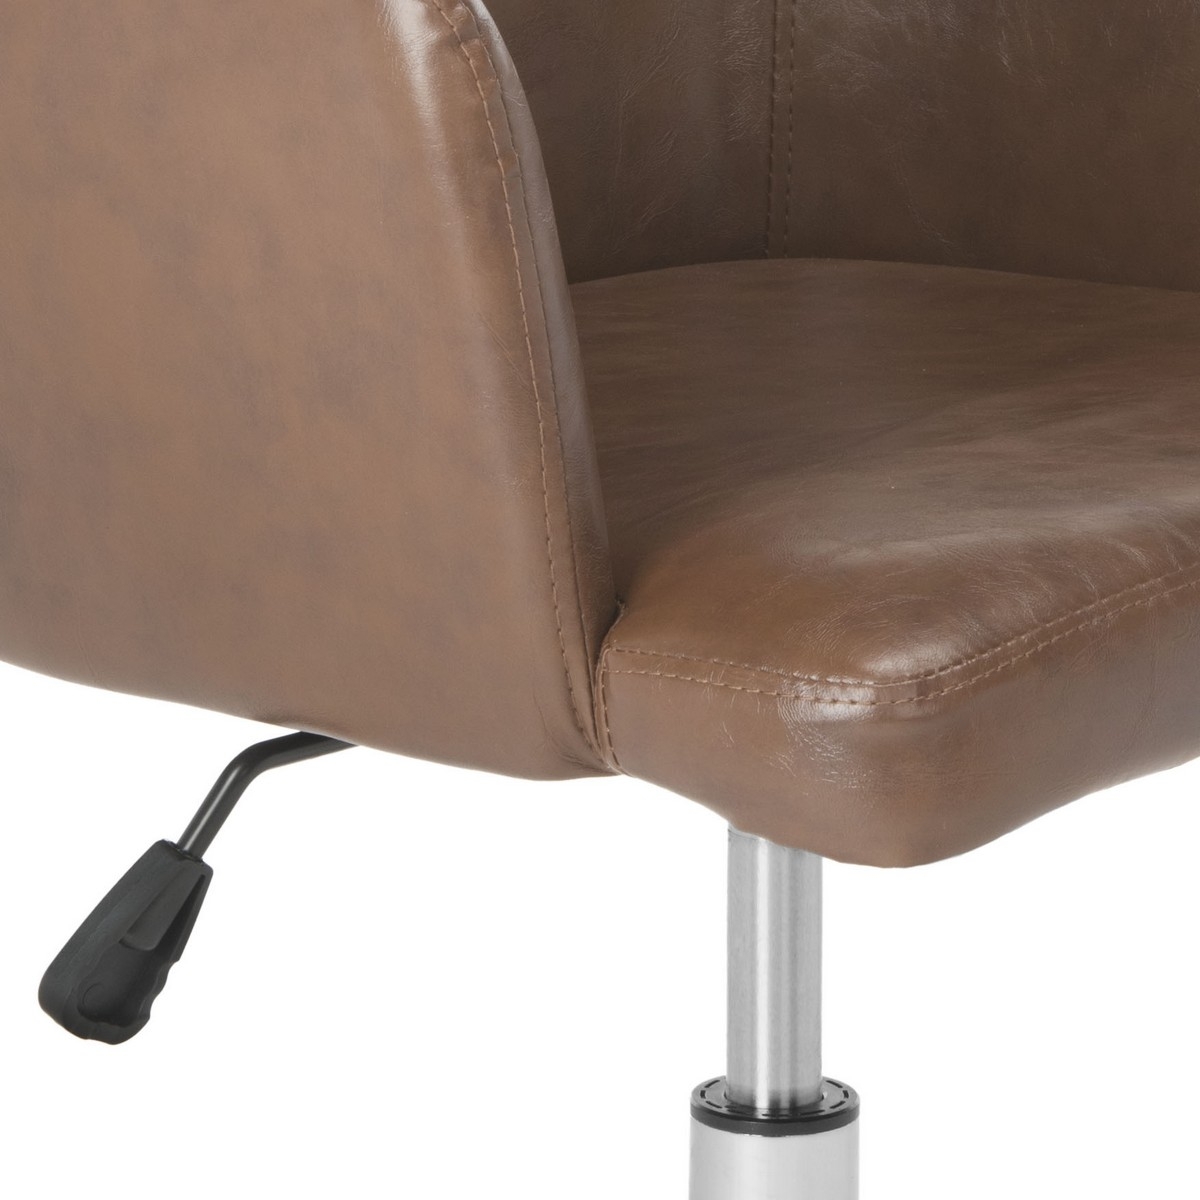 Cadence Swivel Office Chair - Brown/Chrome - Arlo Home - Image 6